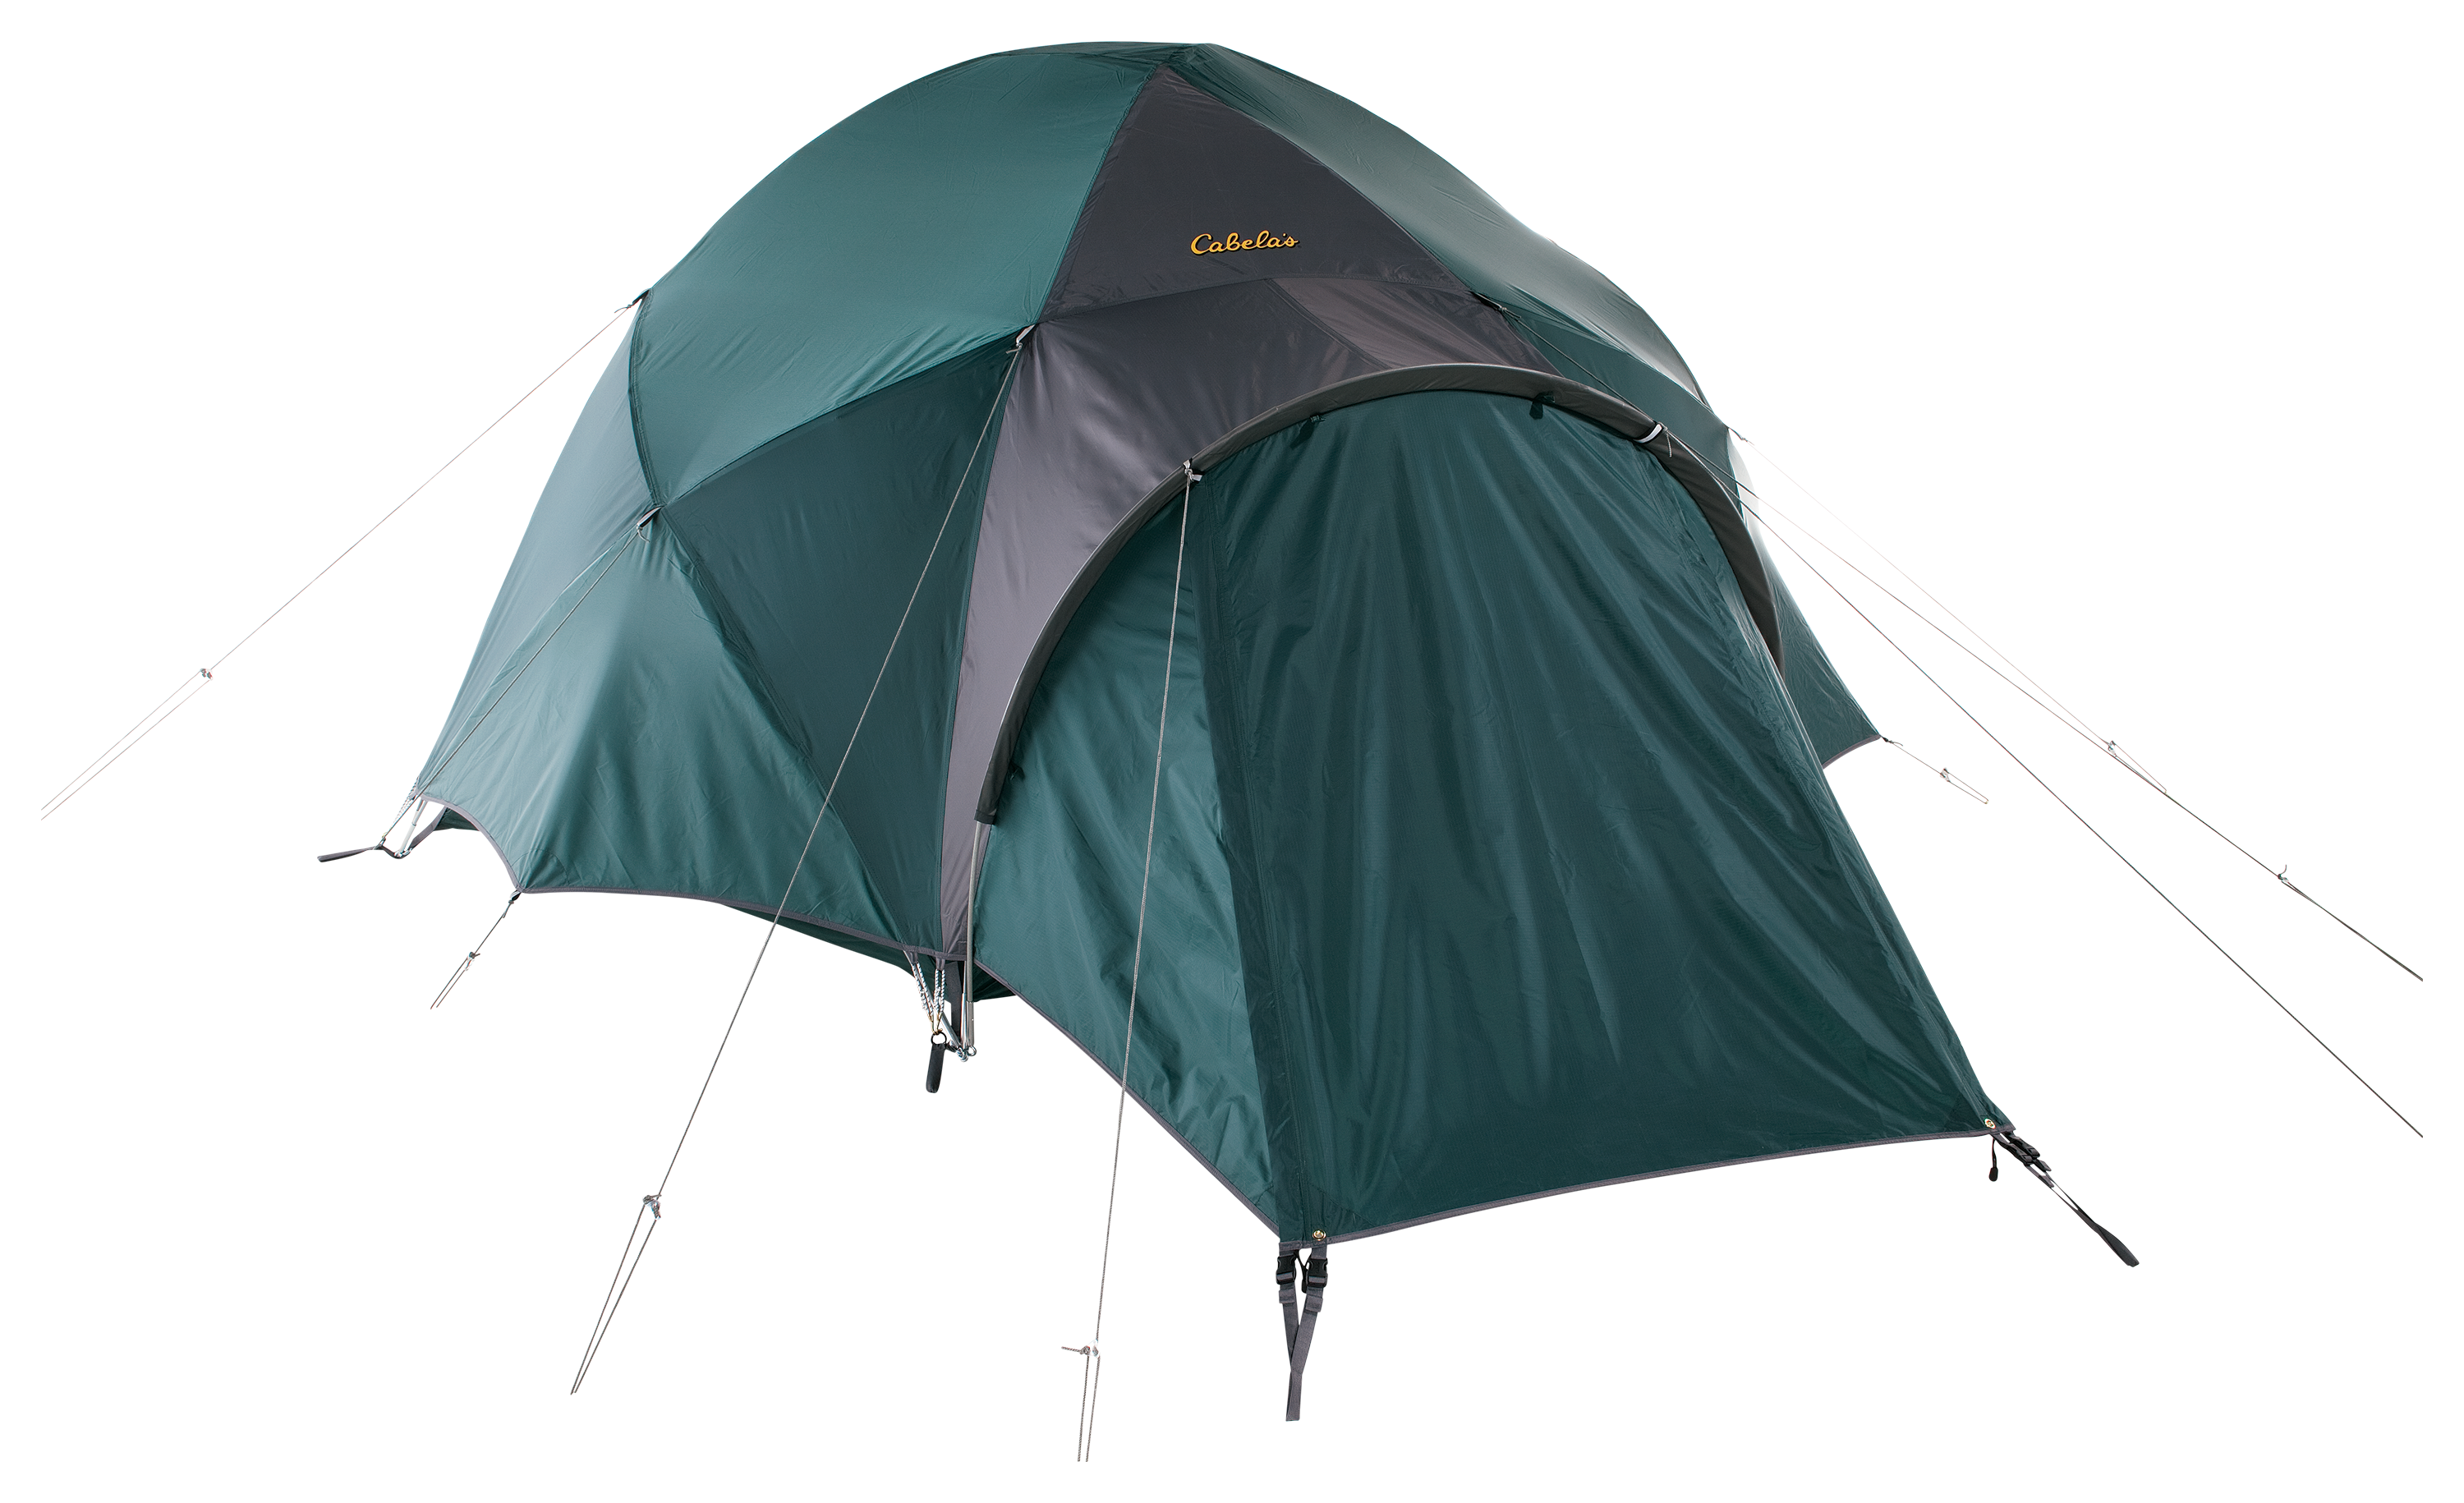 Cabela s Alaskan Guide Model Geodesic 4-Person Tent